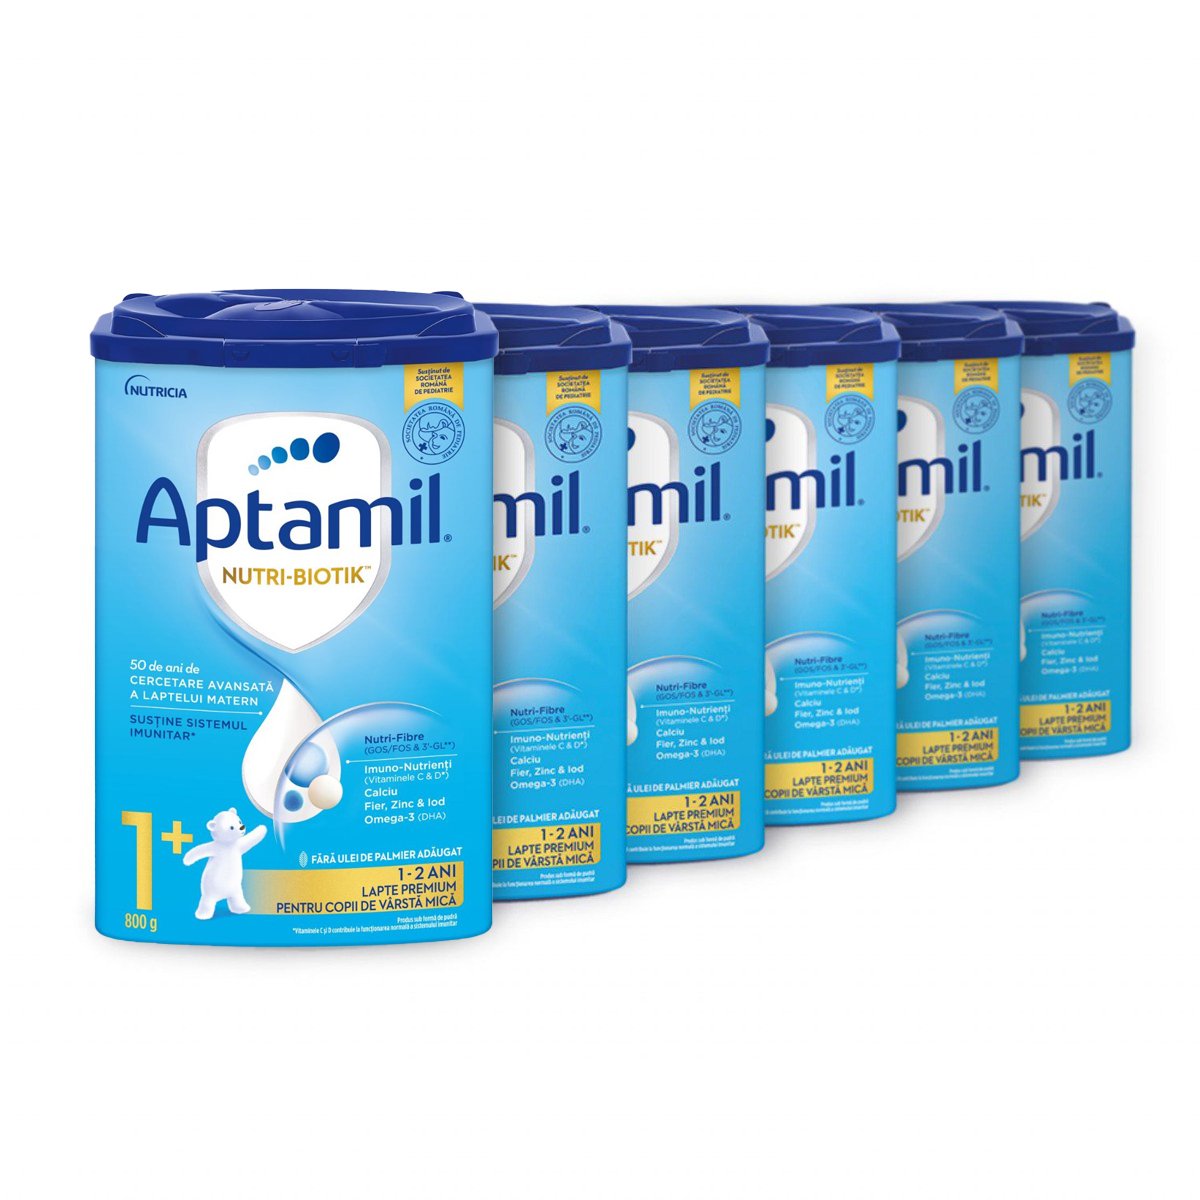 Lapte praf Aptamil Nutri-Biotik 1+, 6 pachete x 800 g, 12-24 luni Lapte praf 2023-09-25